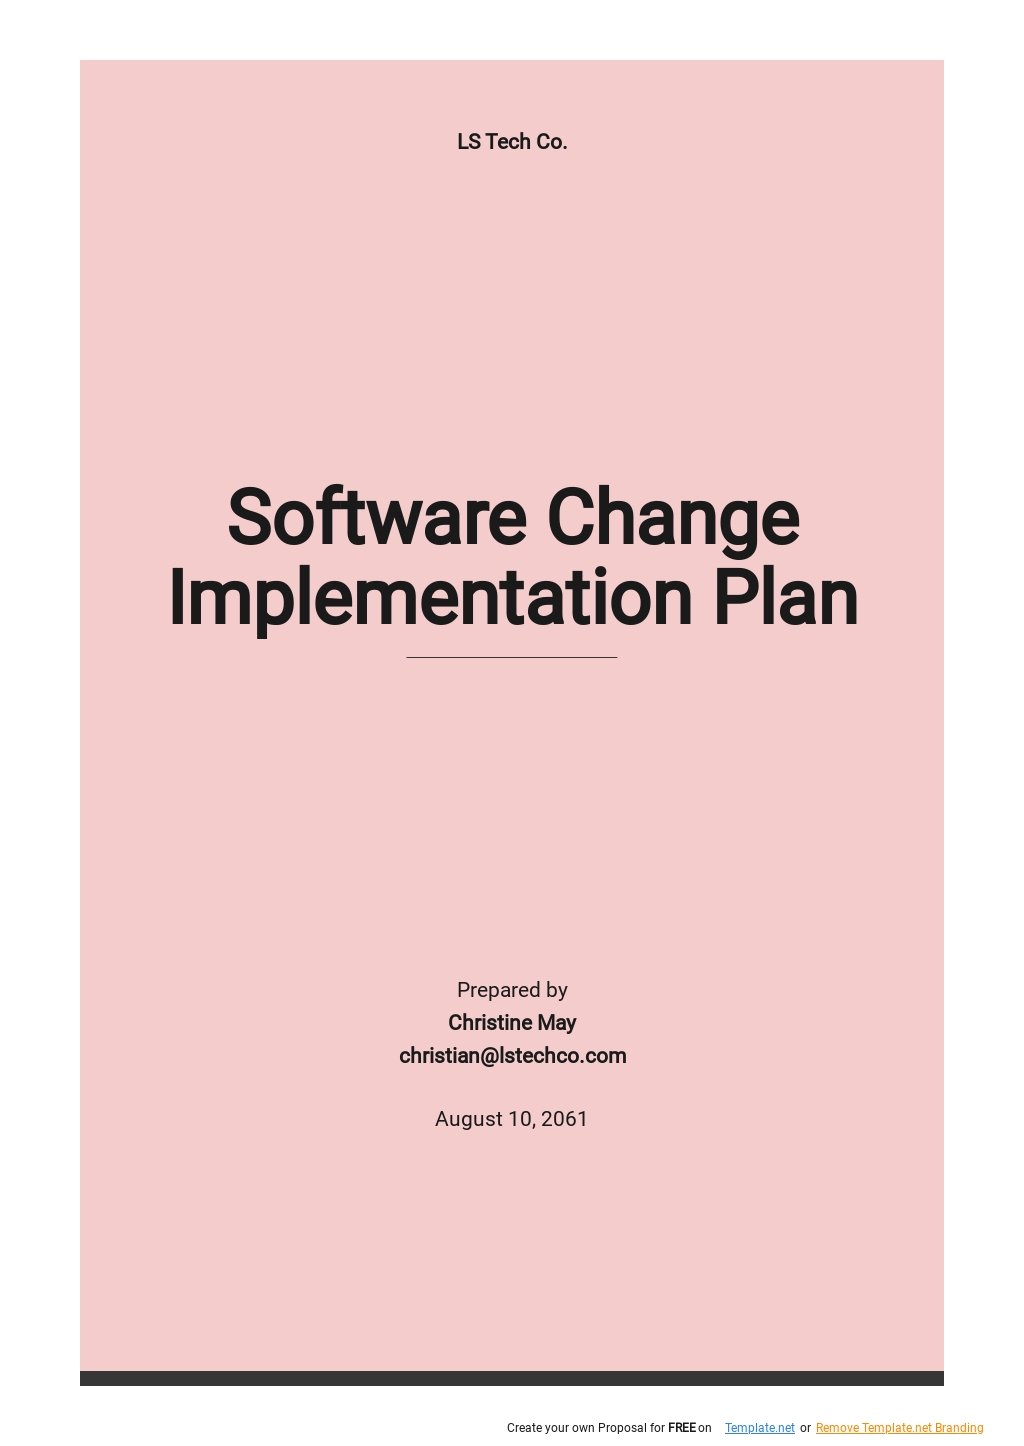 Software Change Implementation Plan Template.jpe